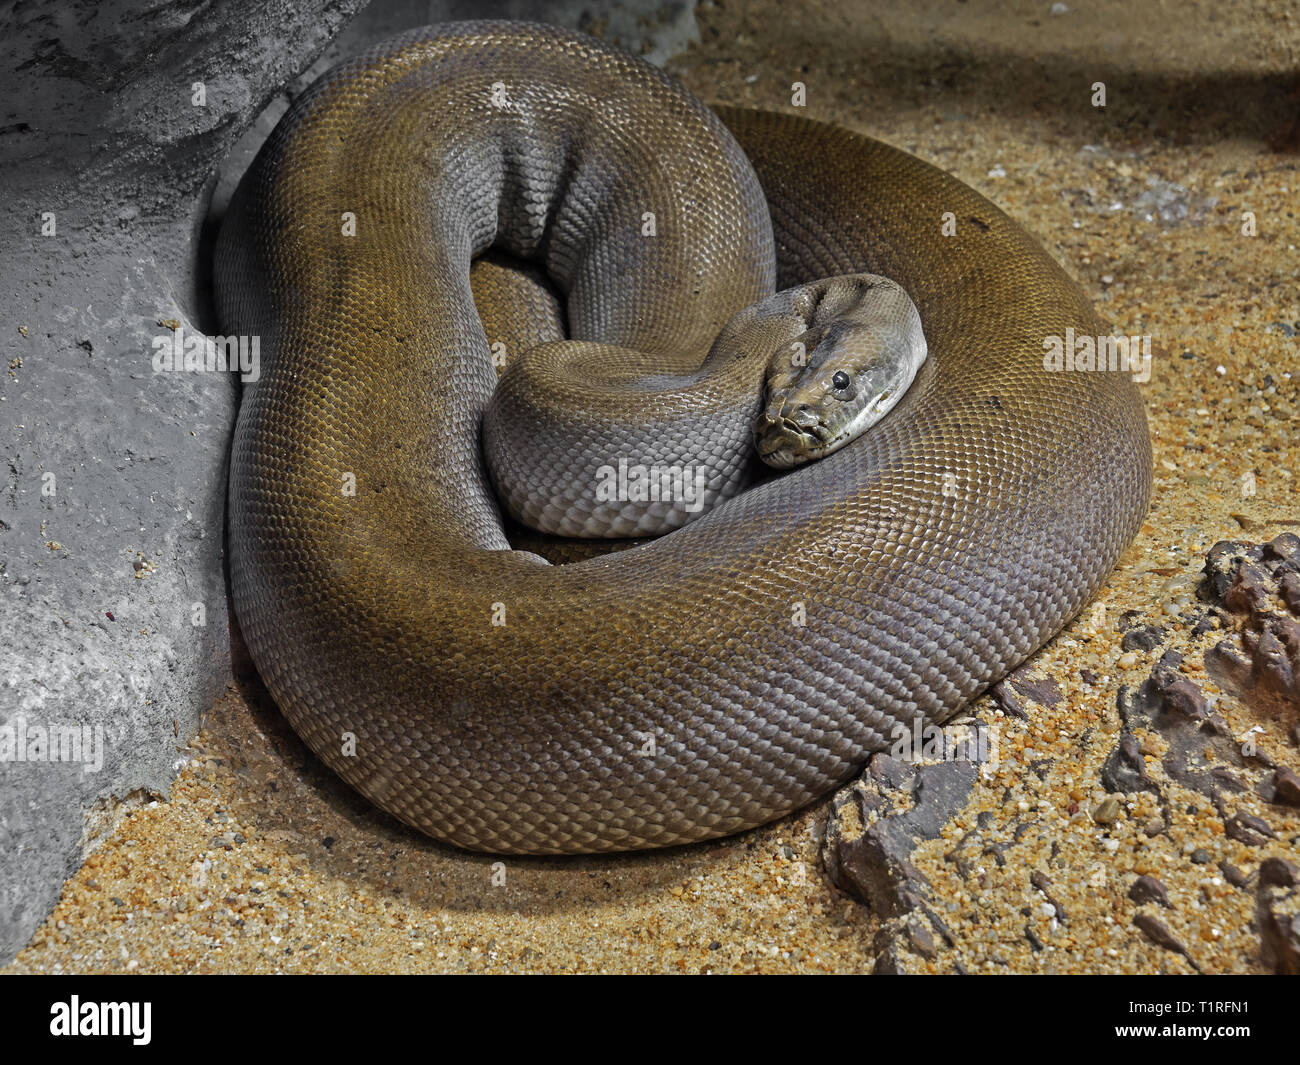 Closeup Patternless Green Burmese Python on Sand Stock Photo